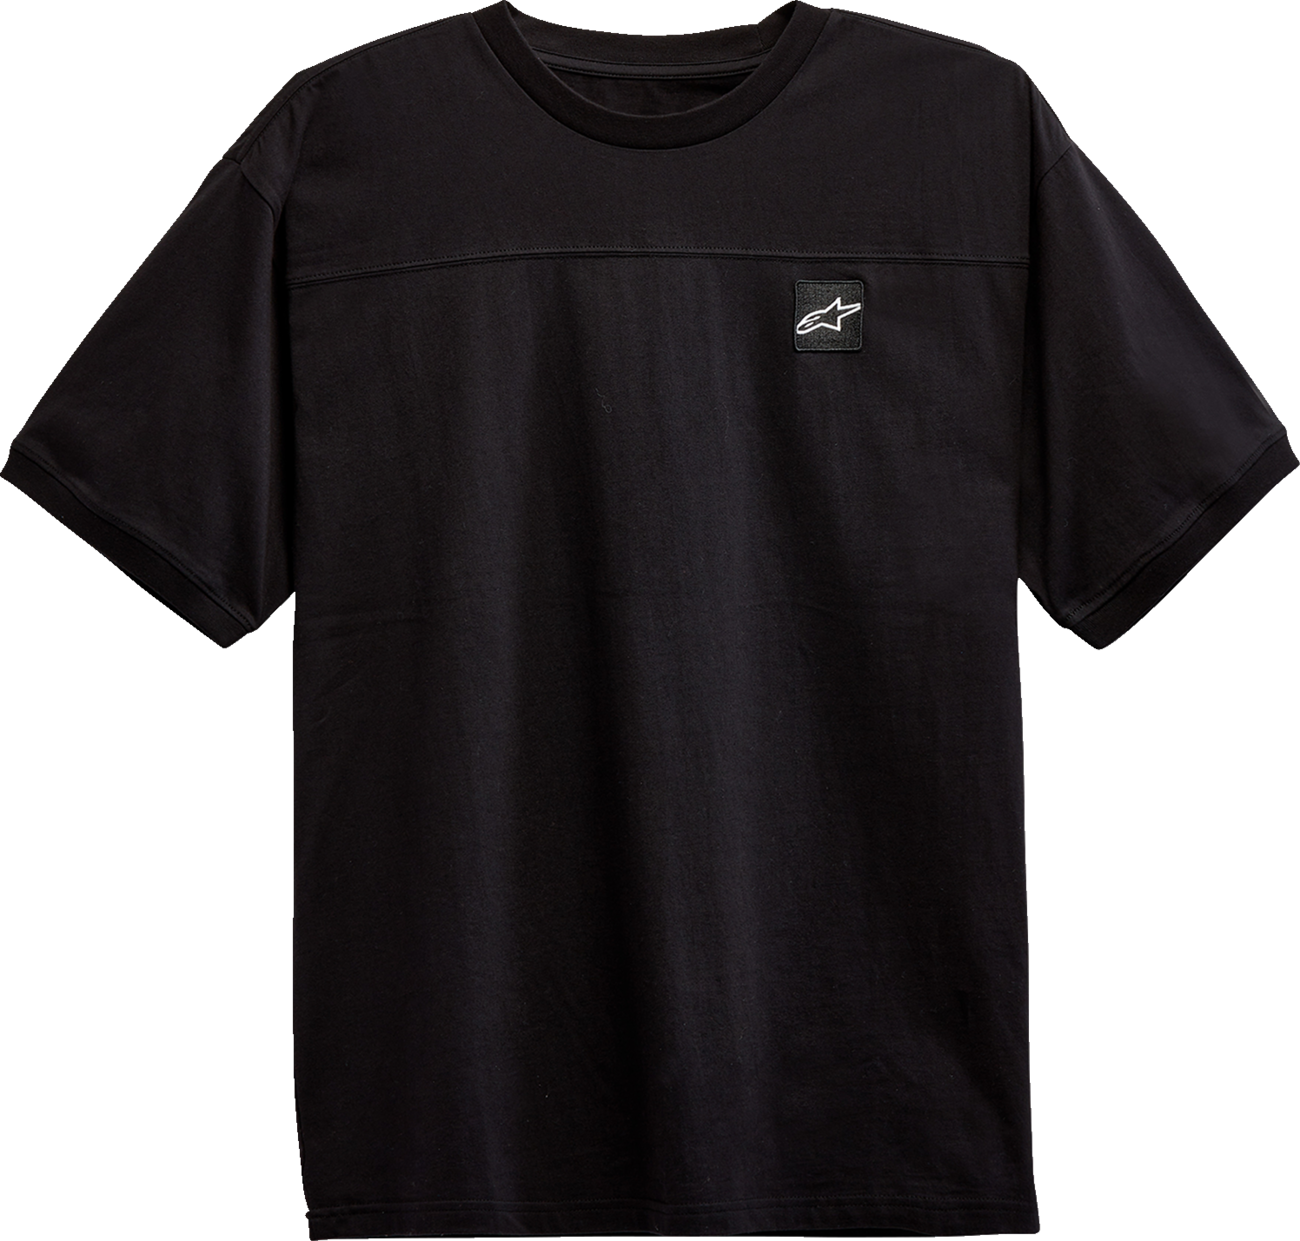 ALPINESTARS Chunk Knit T-Shirt - Black - Medium 12137210210M